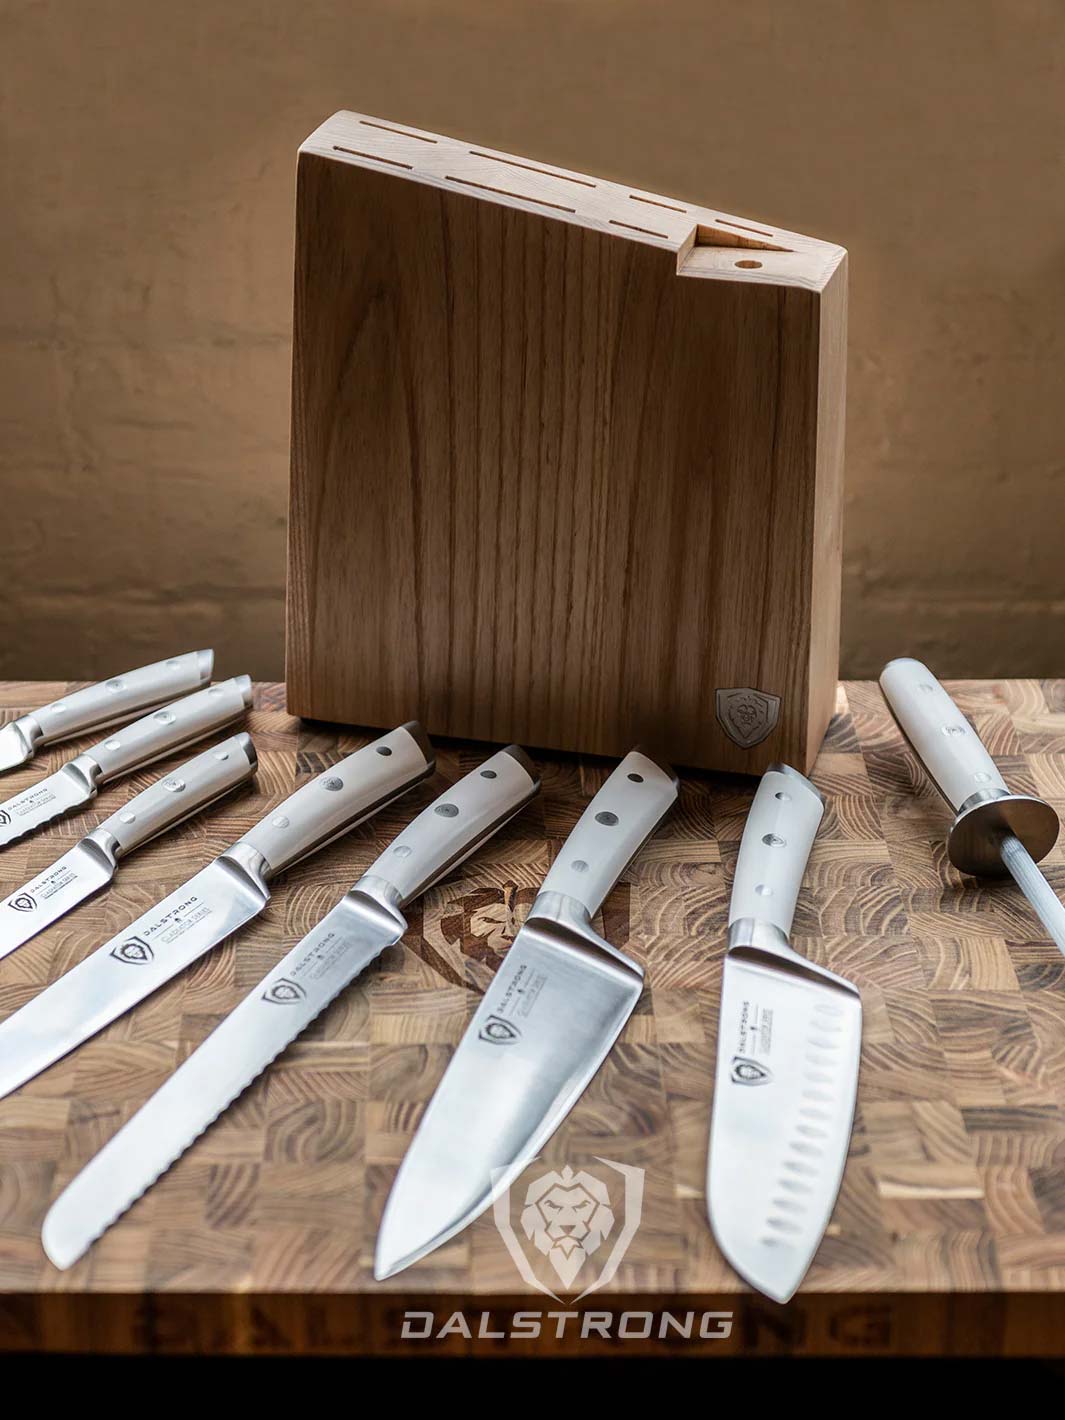 Dalstrong Knife Block Set - 8 Piece - Vanquish Series - Forged High Carbon German Steel - Kitchen Knife Set - Premium Wood Block - White Pom Handle